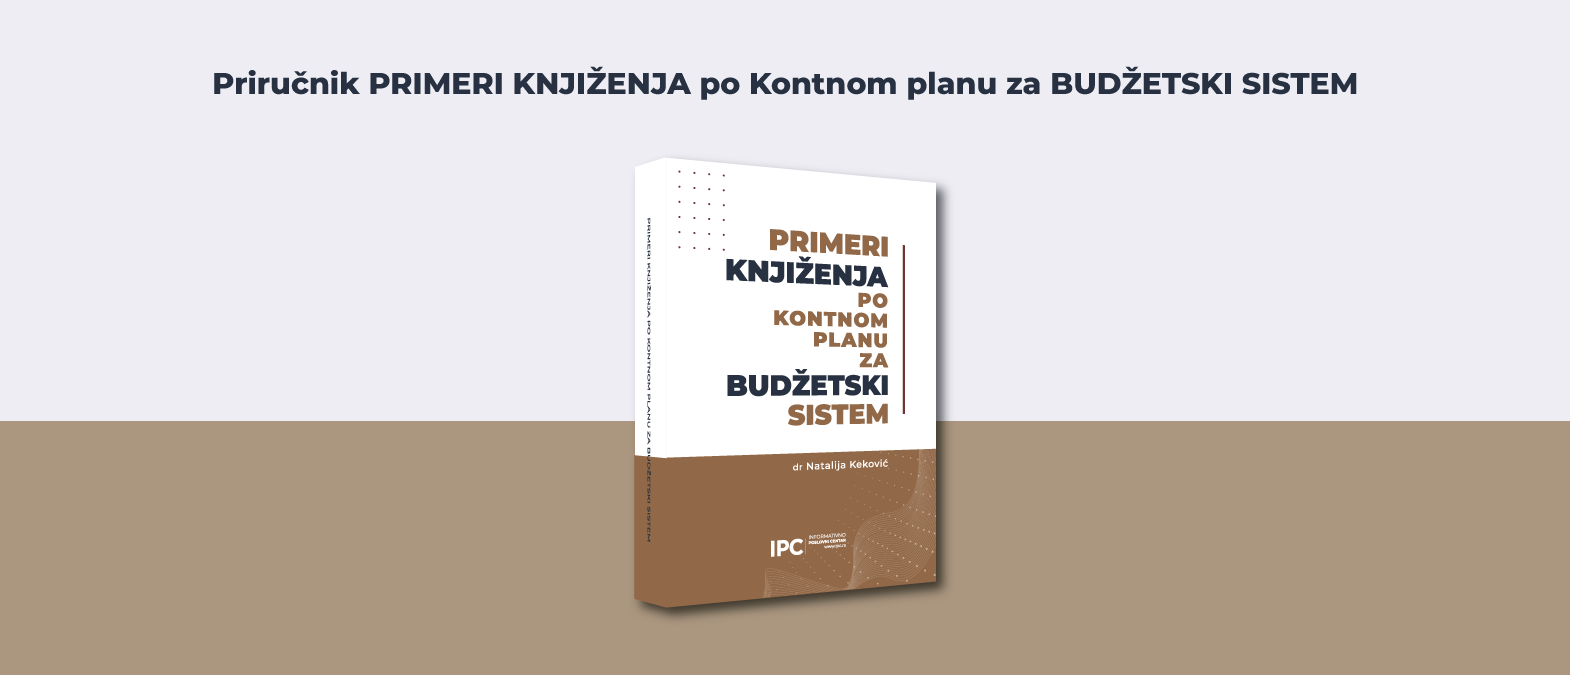 IPC priručnik - PRIMERI KNJIŽENJA po Kontnom planu za BUDŽETSKI SISTEM